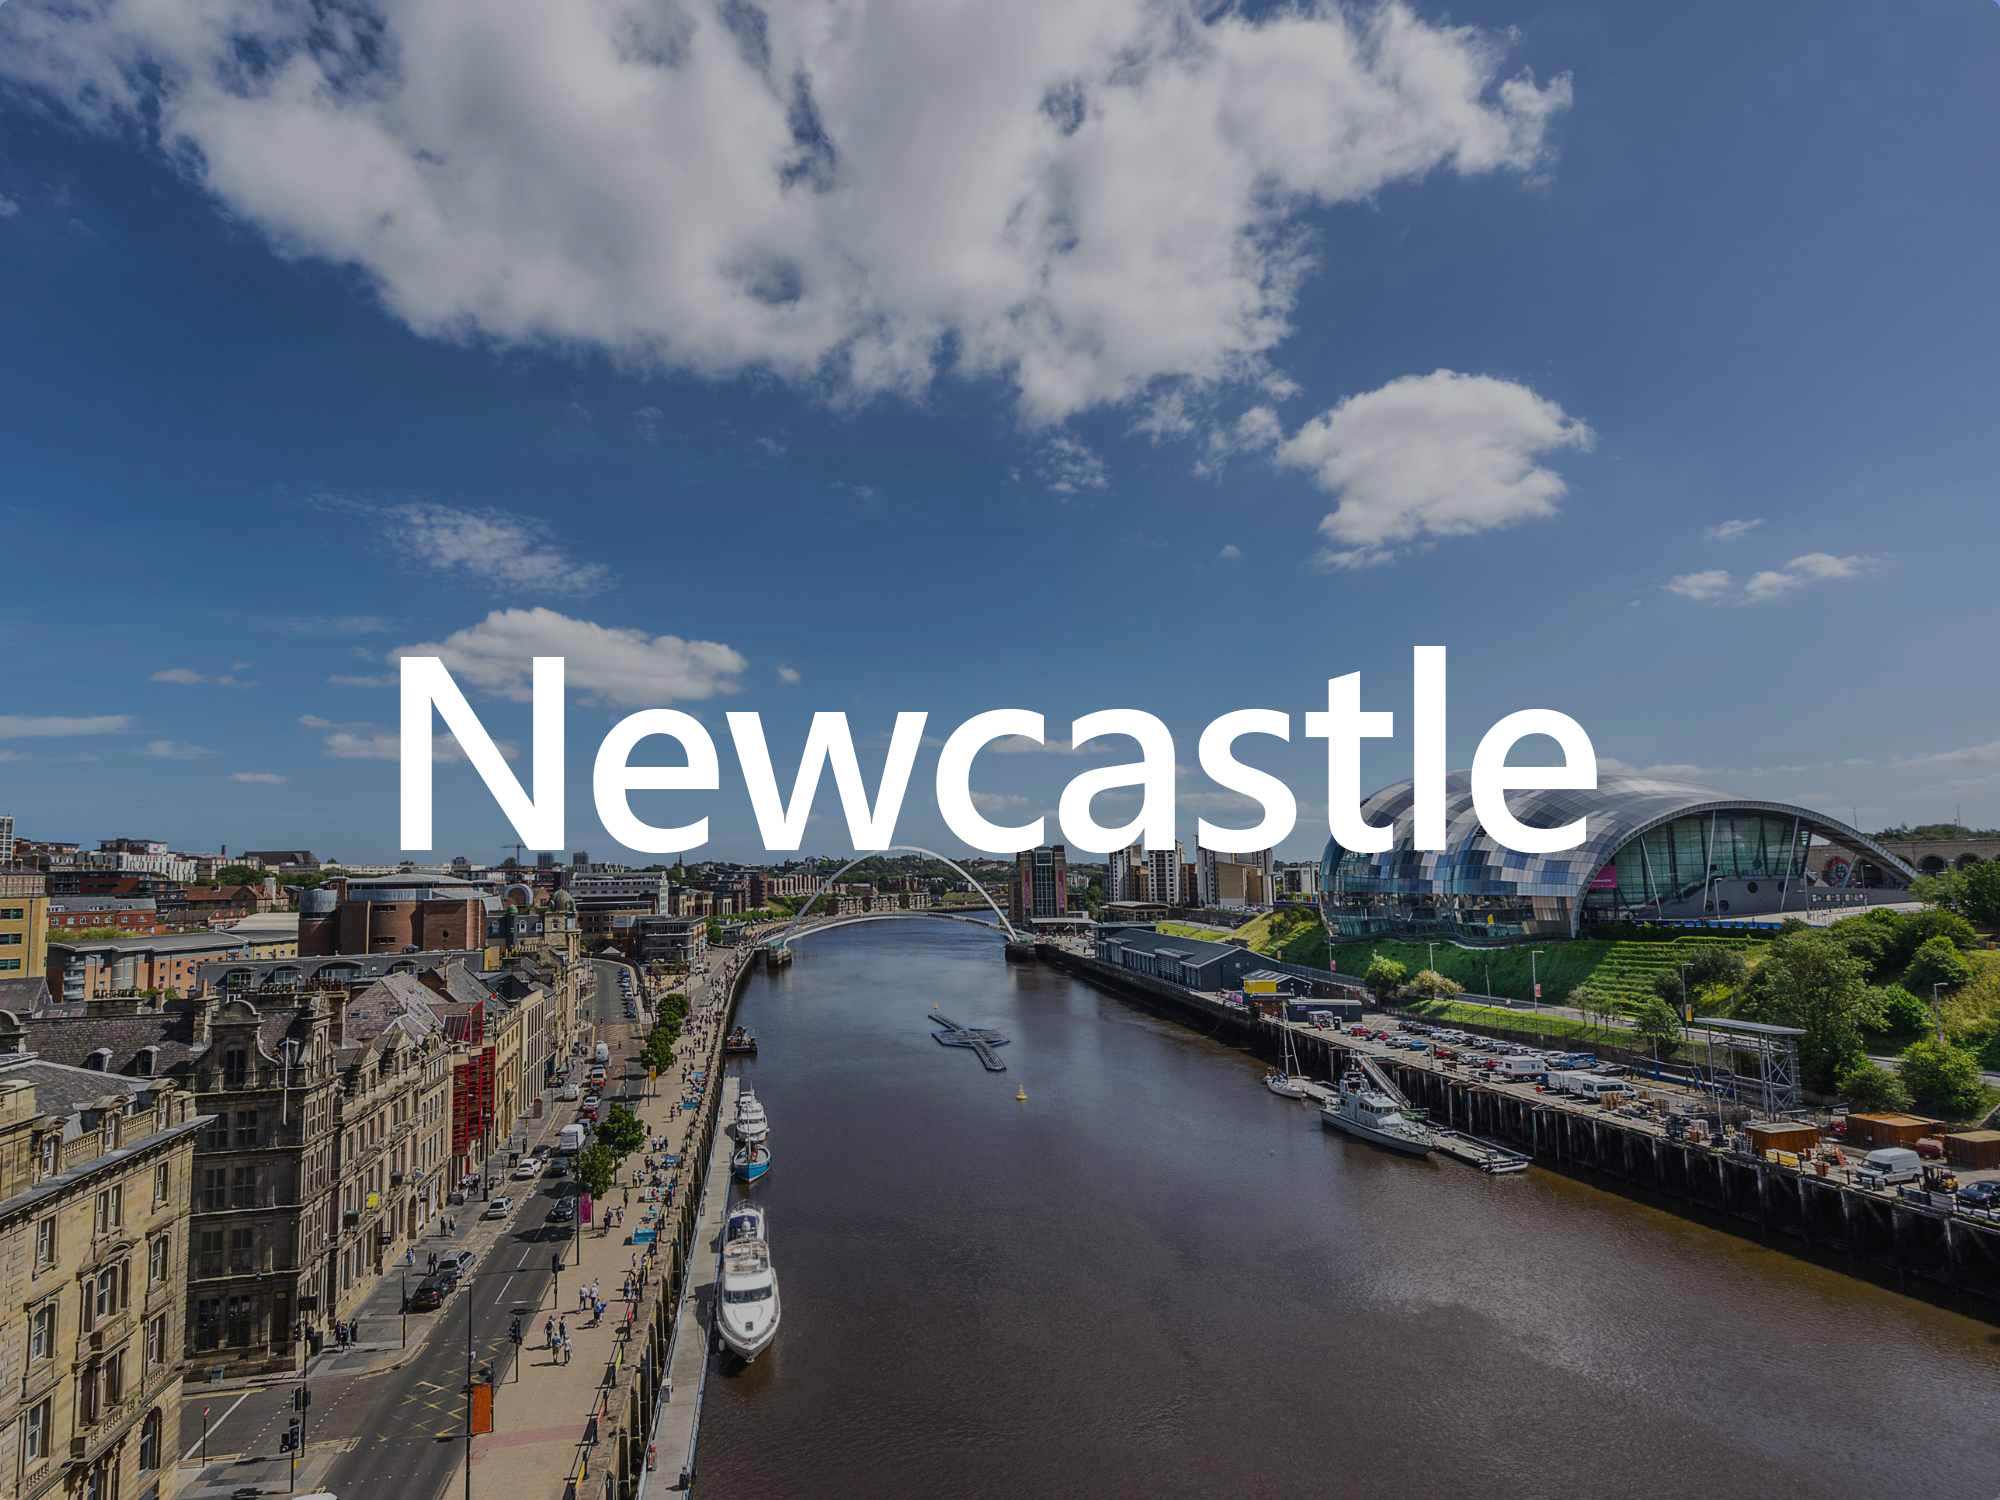 Cheap Stag Do Destinations - Newcastle